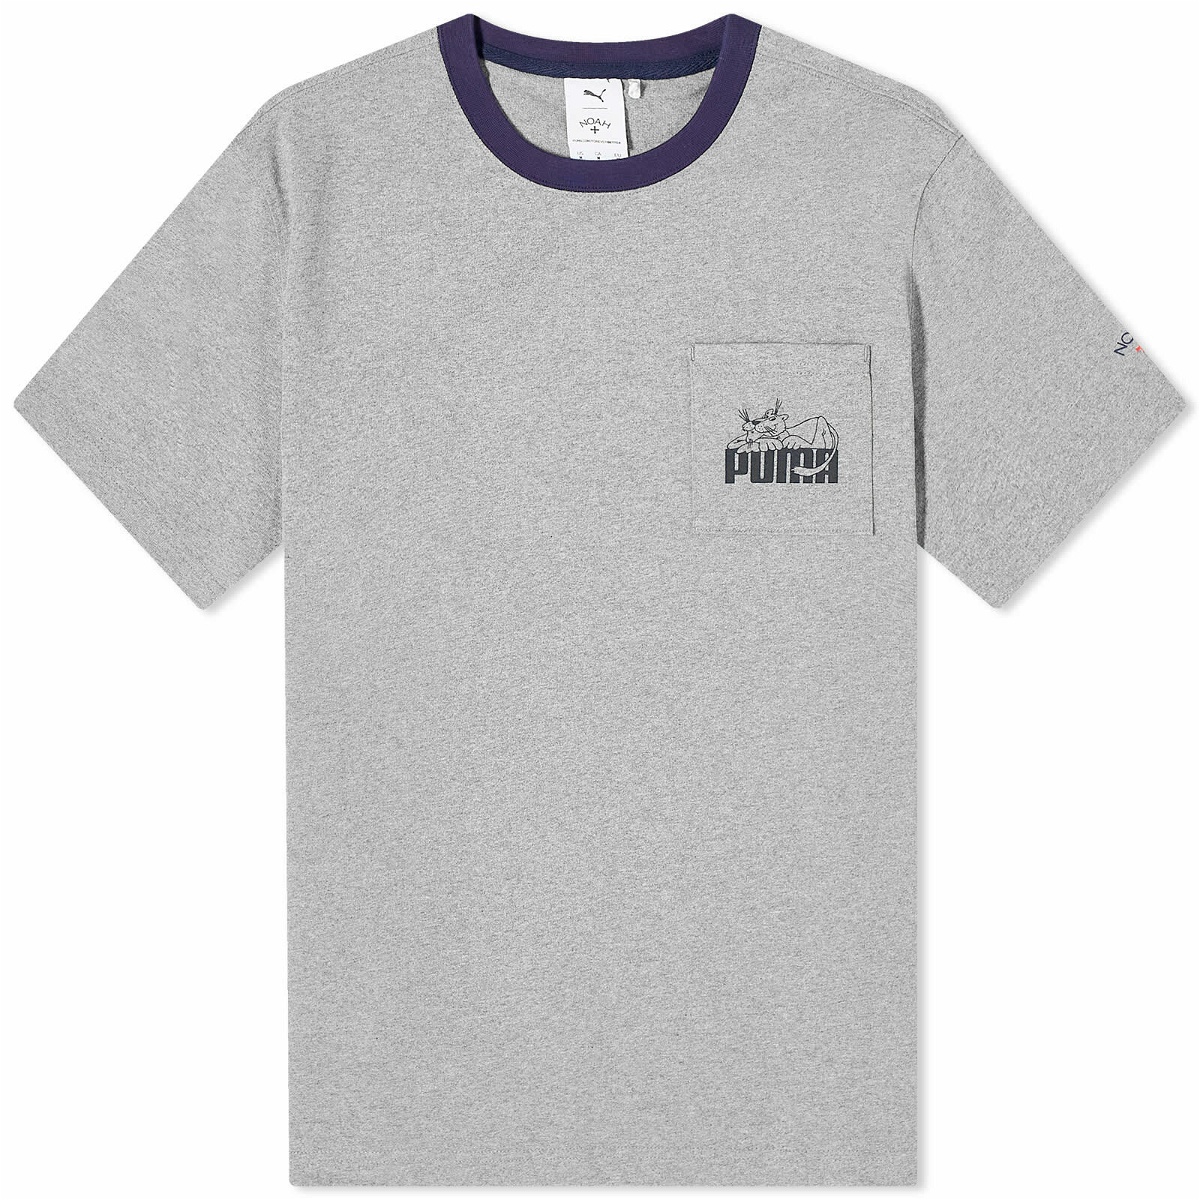 Puma Men\'s MMQ Puma Heather Grey in Light T-Shirt Baseline Long Sleeve Pocket